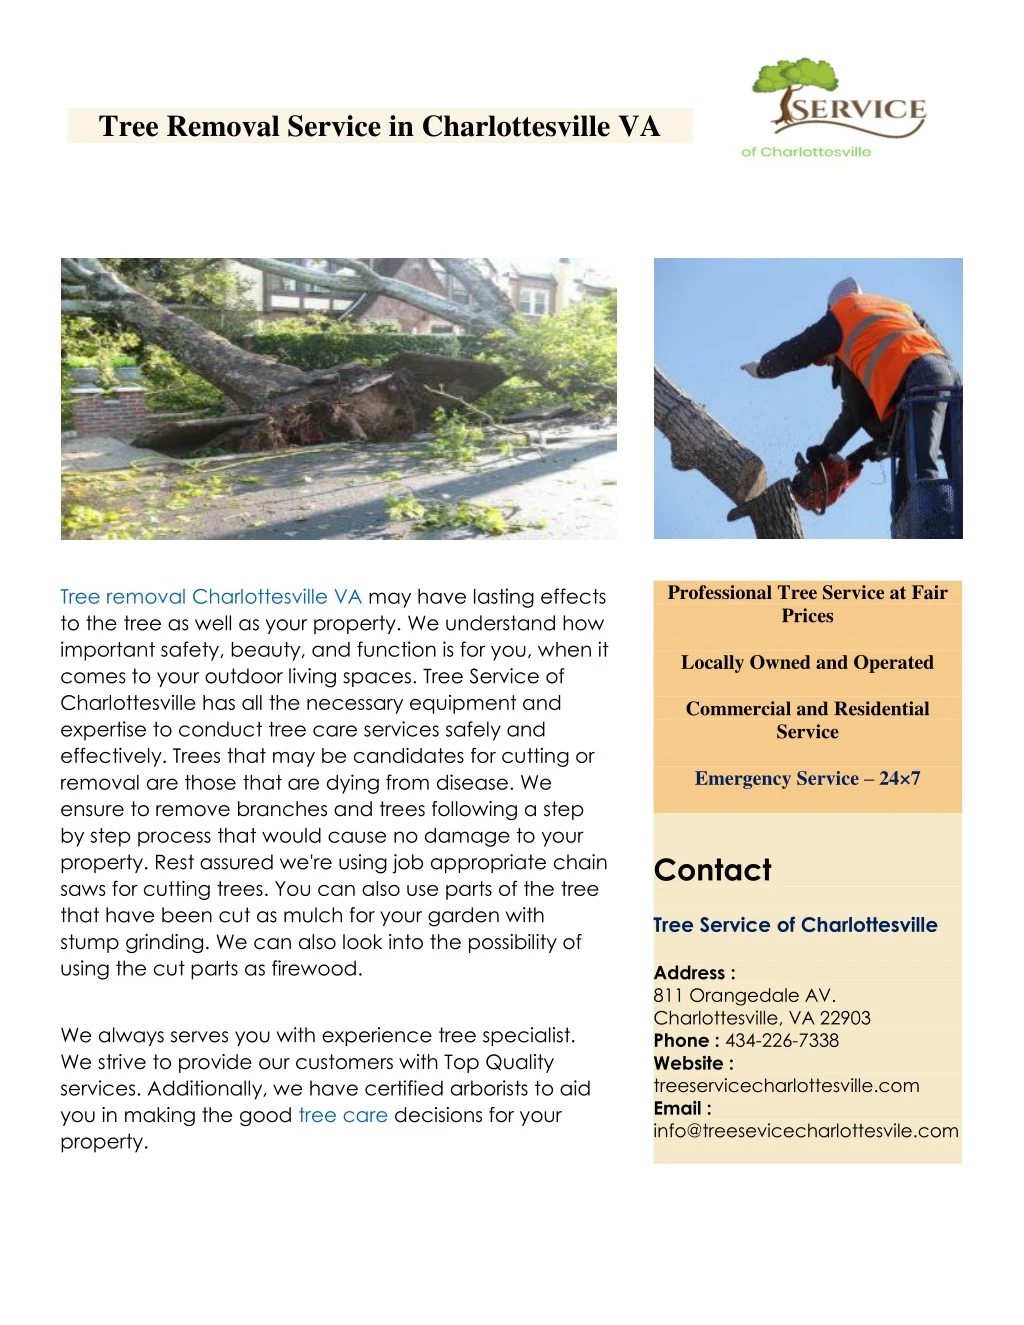 tree removal service in charlottesville va